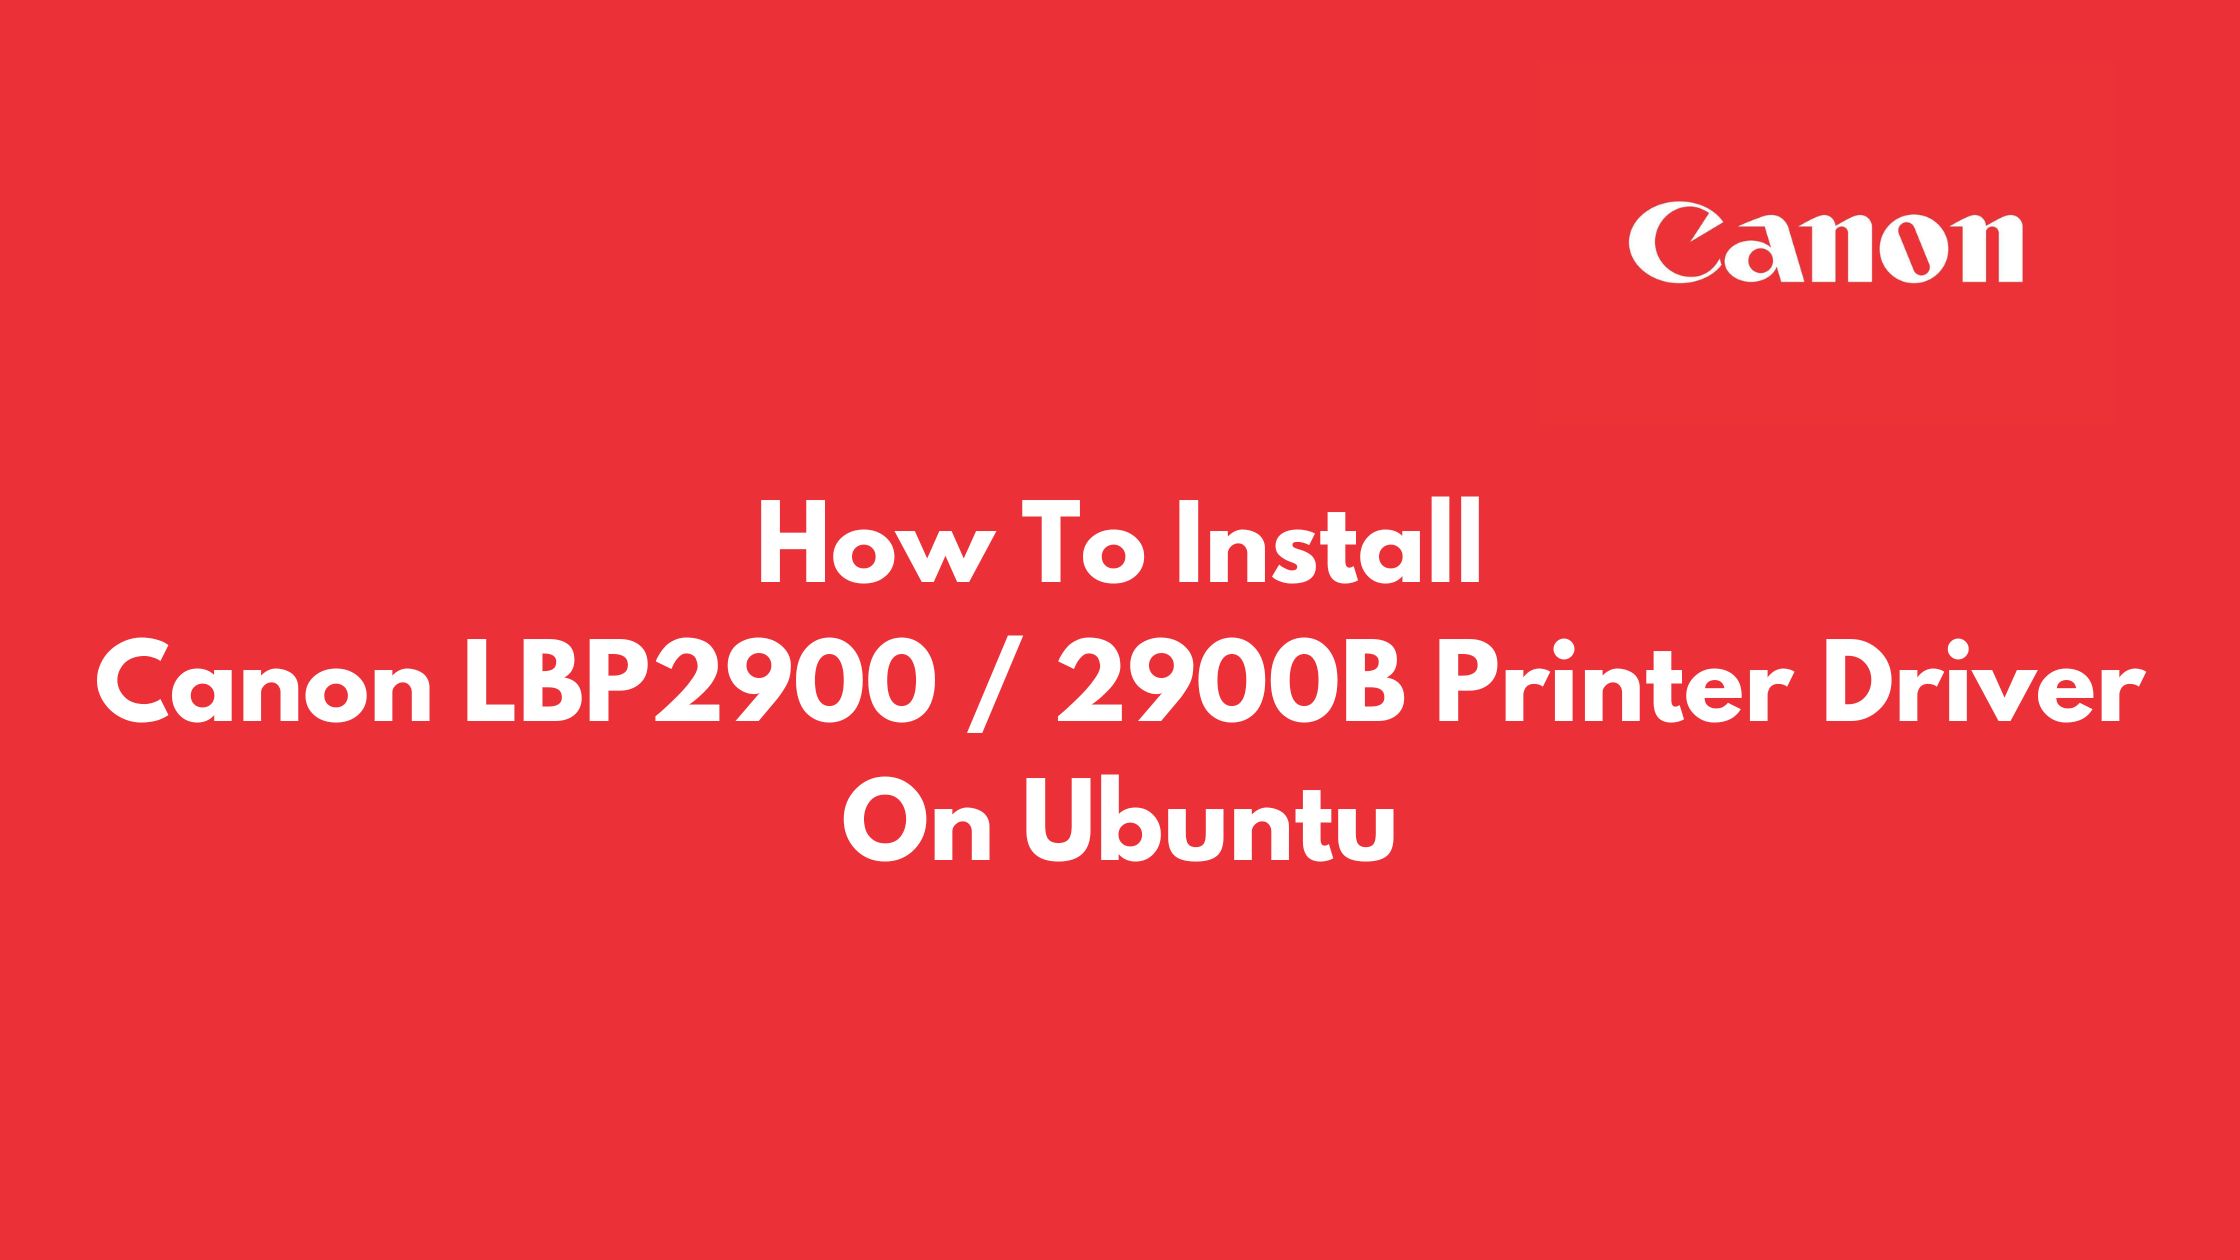 How To Install Canon LBP2900 / 2900B Printer Driver On Ubuntu